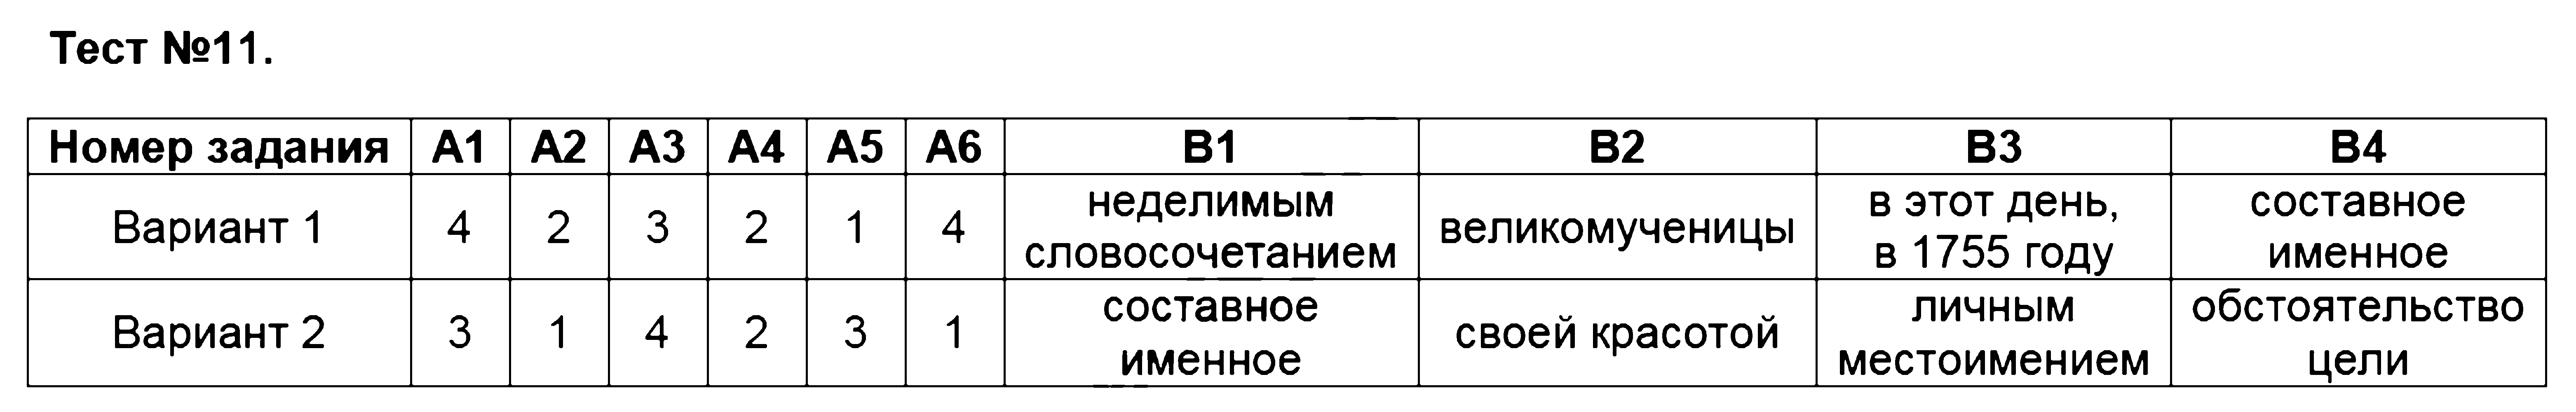 ГДЗ Русский язык 8 класс - Тест 11